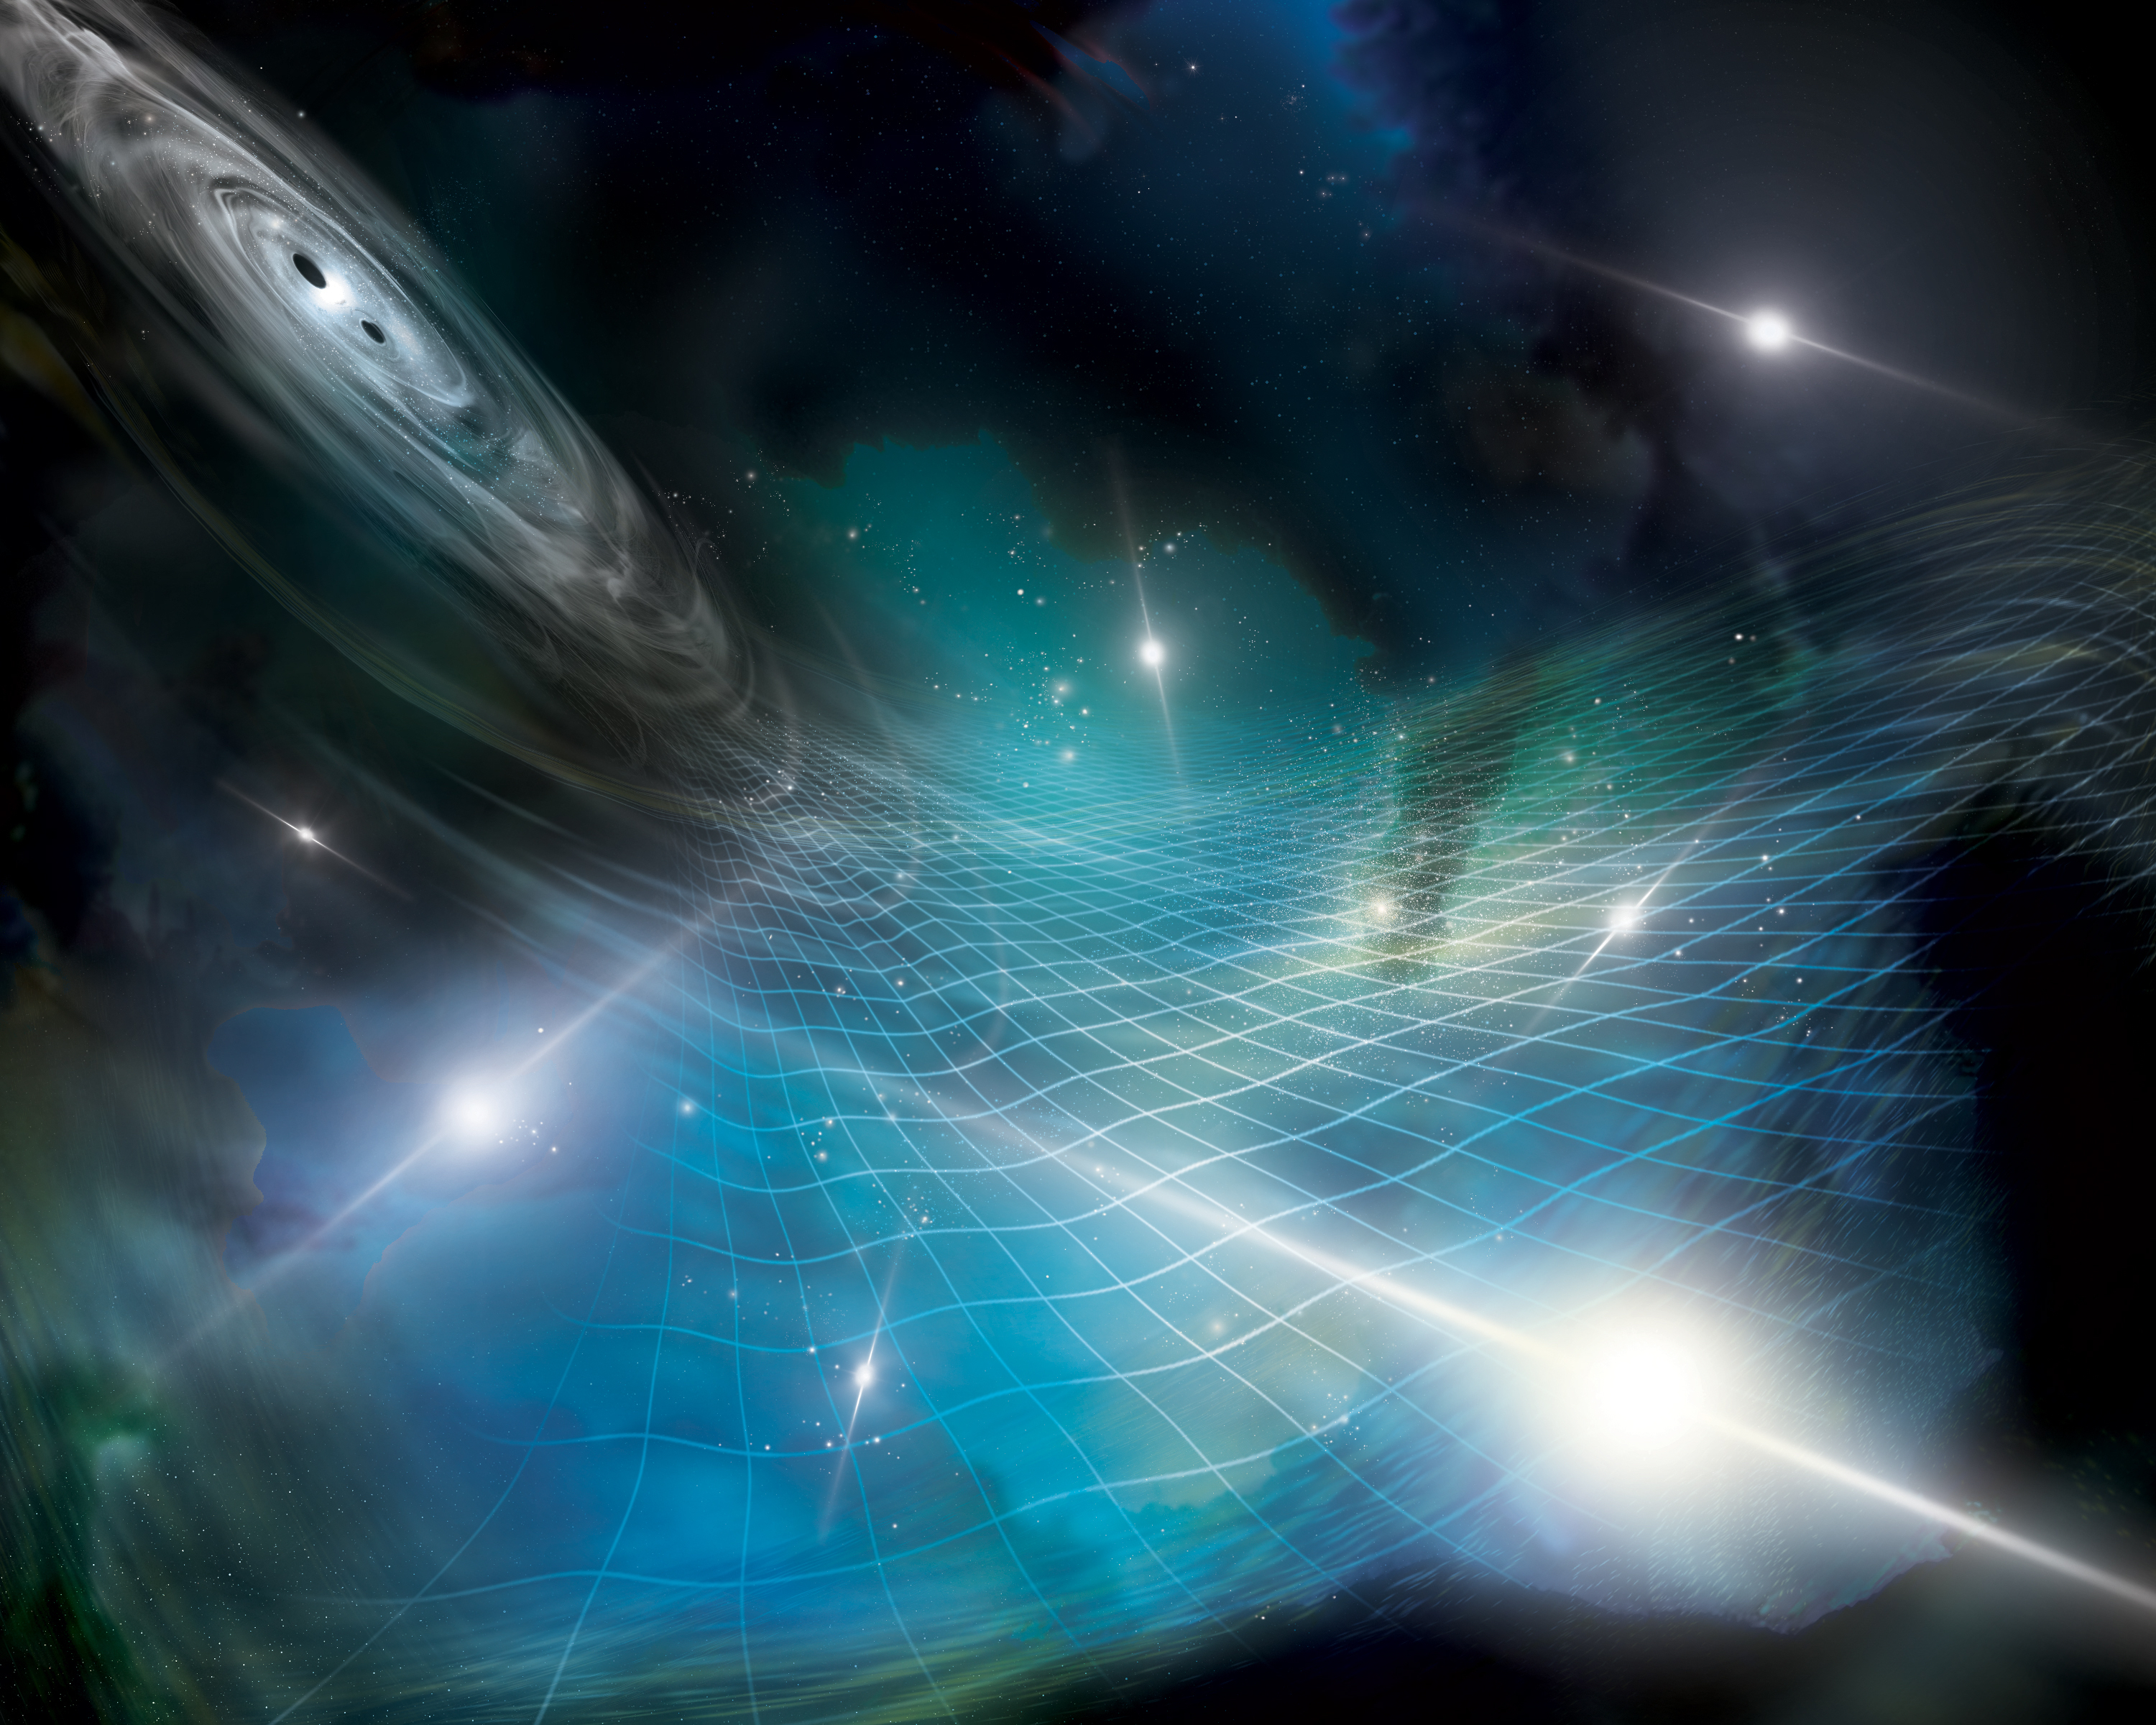 Gravitational Waves and Pulsar Timing Arrays